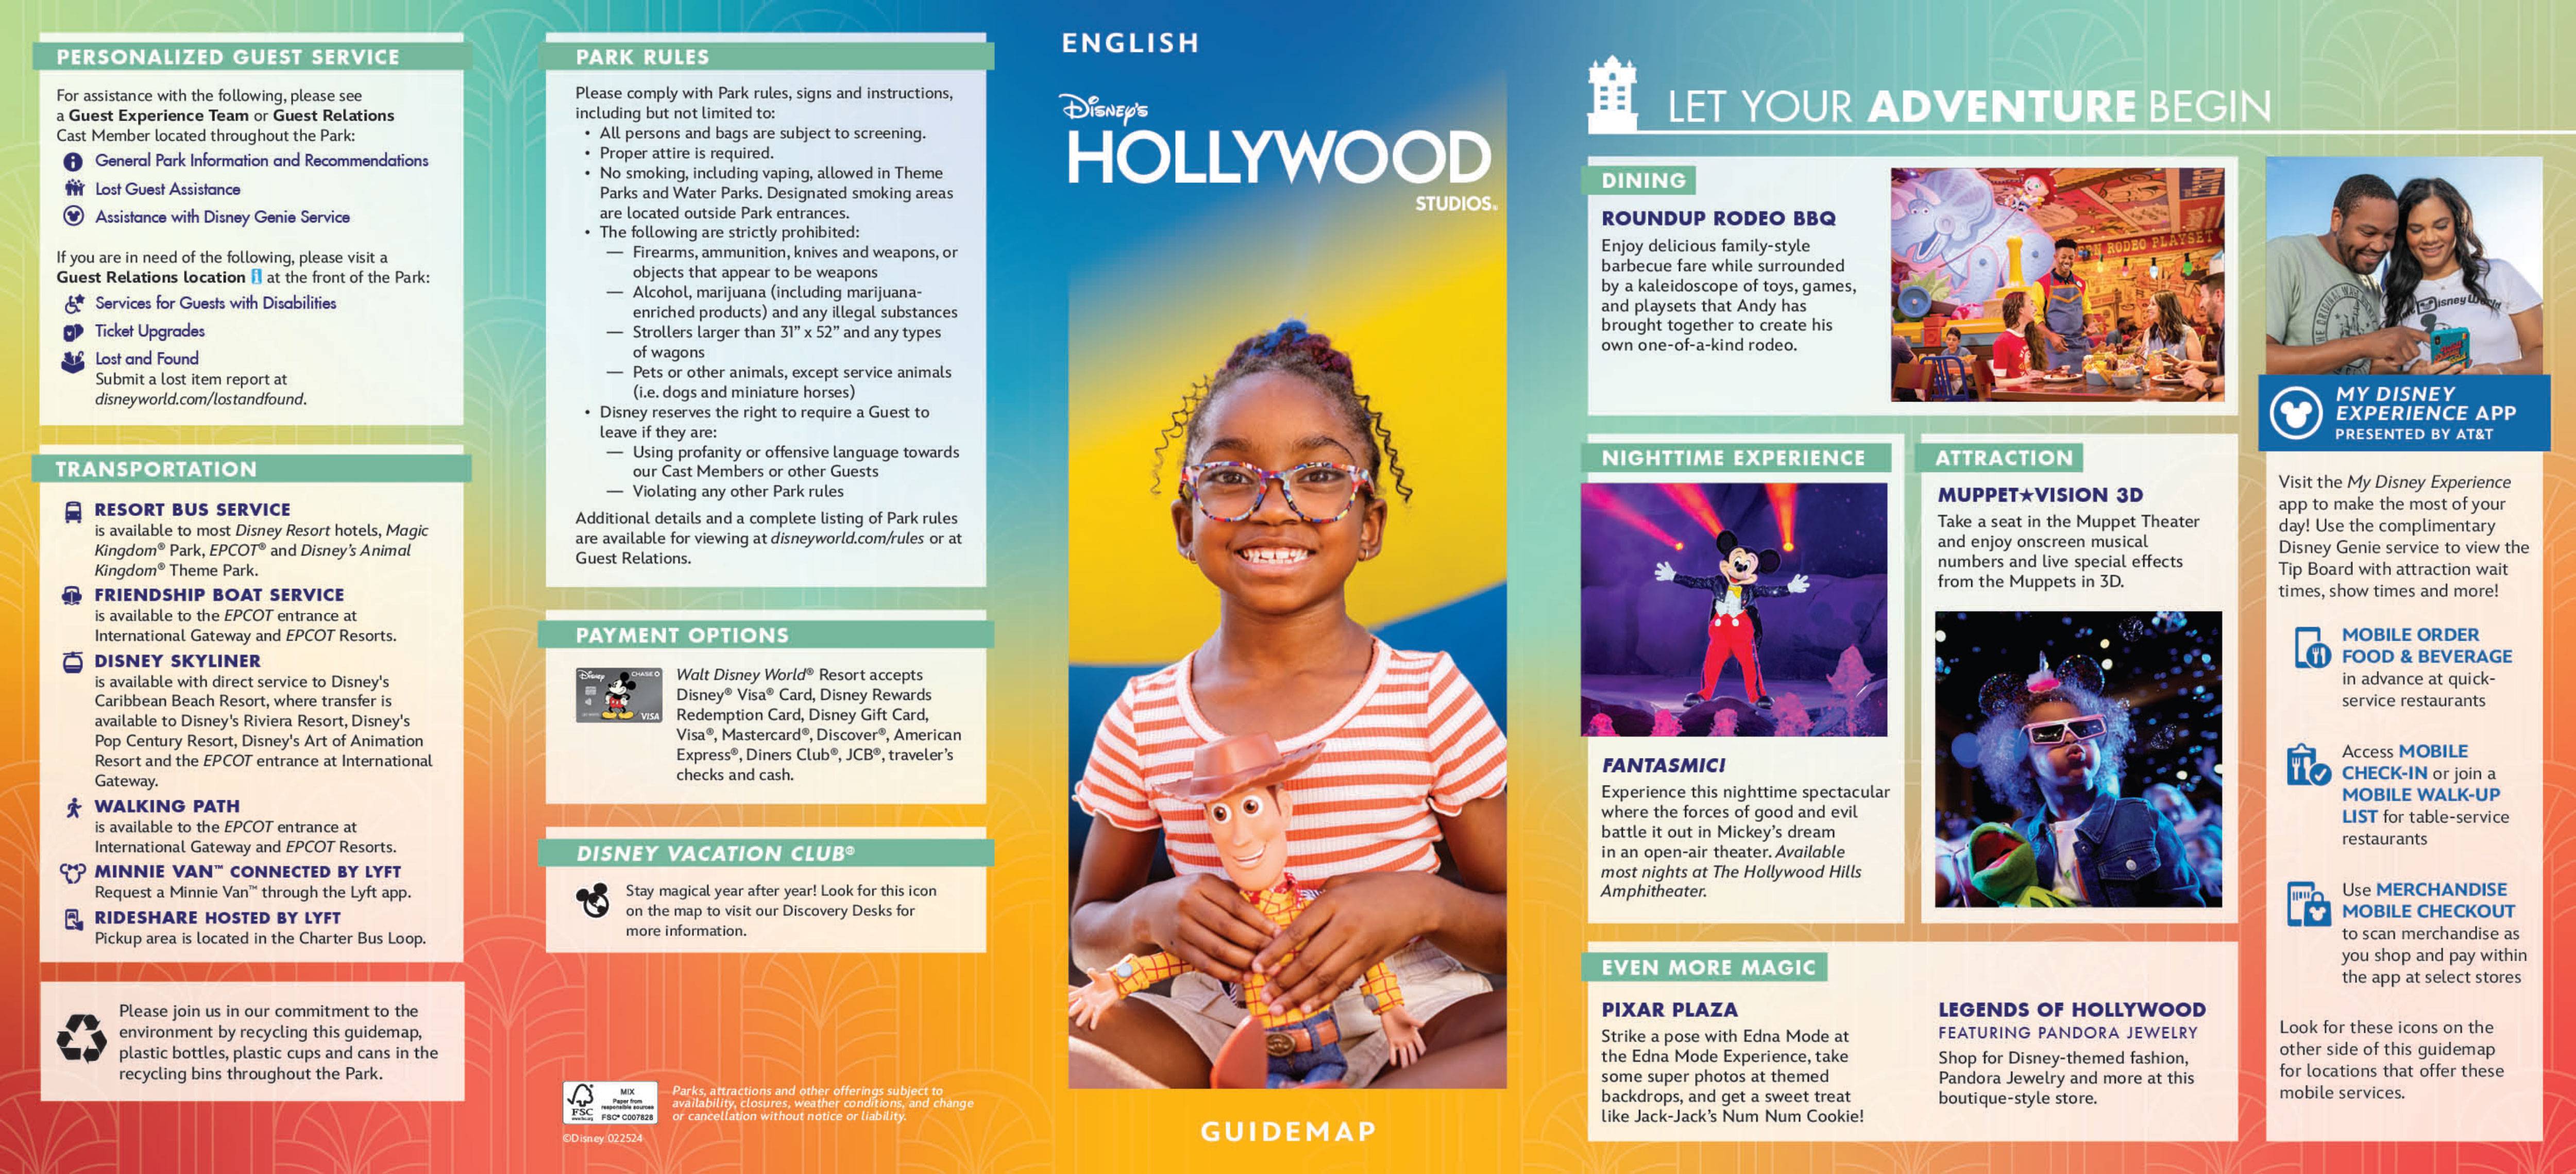 Disney's Hollywood Studios guidemap - Front